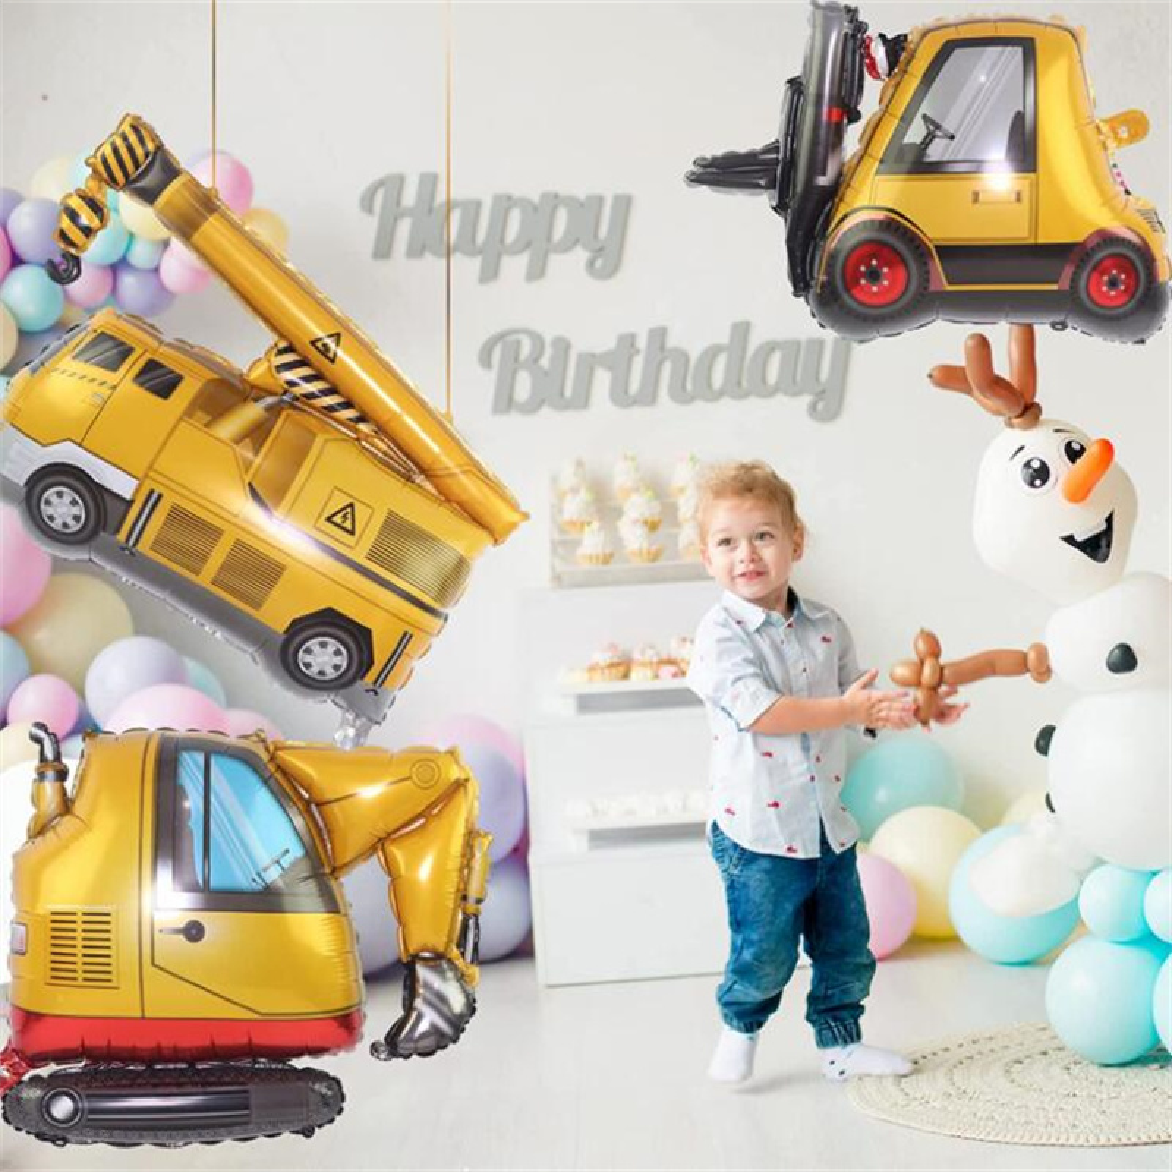 Party Decoration Balloon - Foil Balloon - Large Crane Truck